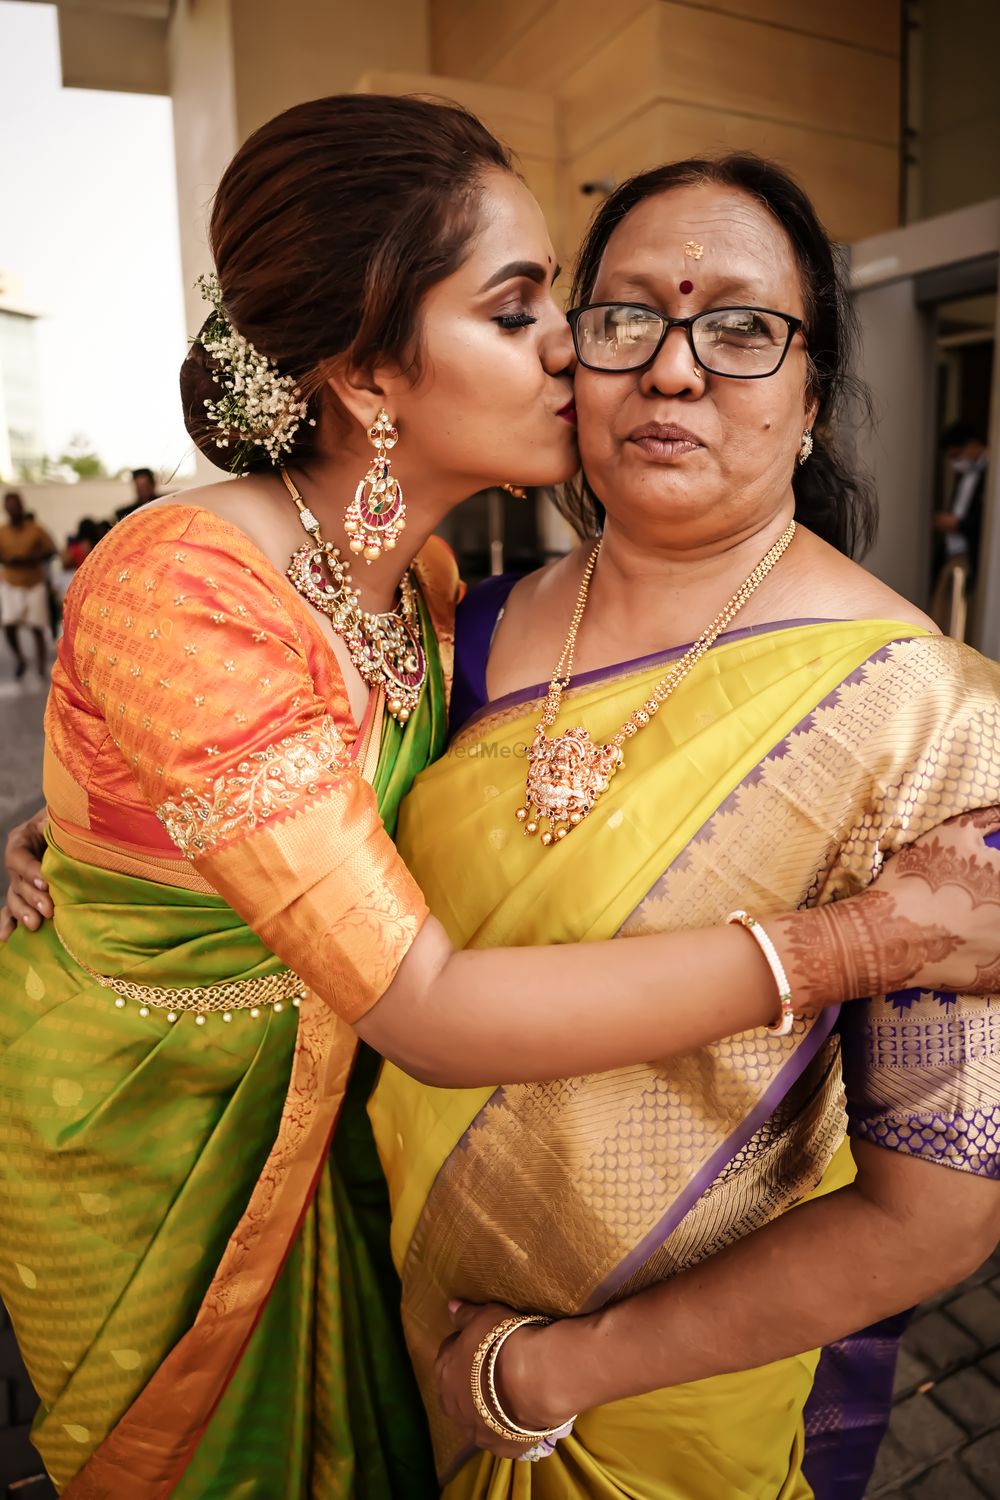 Photo From Keerthana & vishnu - By Crown Ads Wedding Company